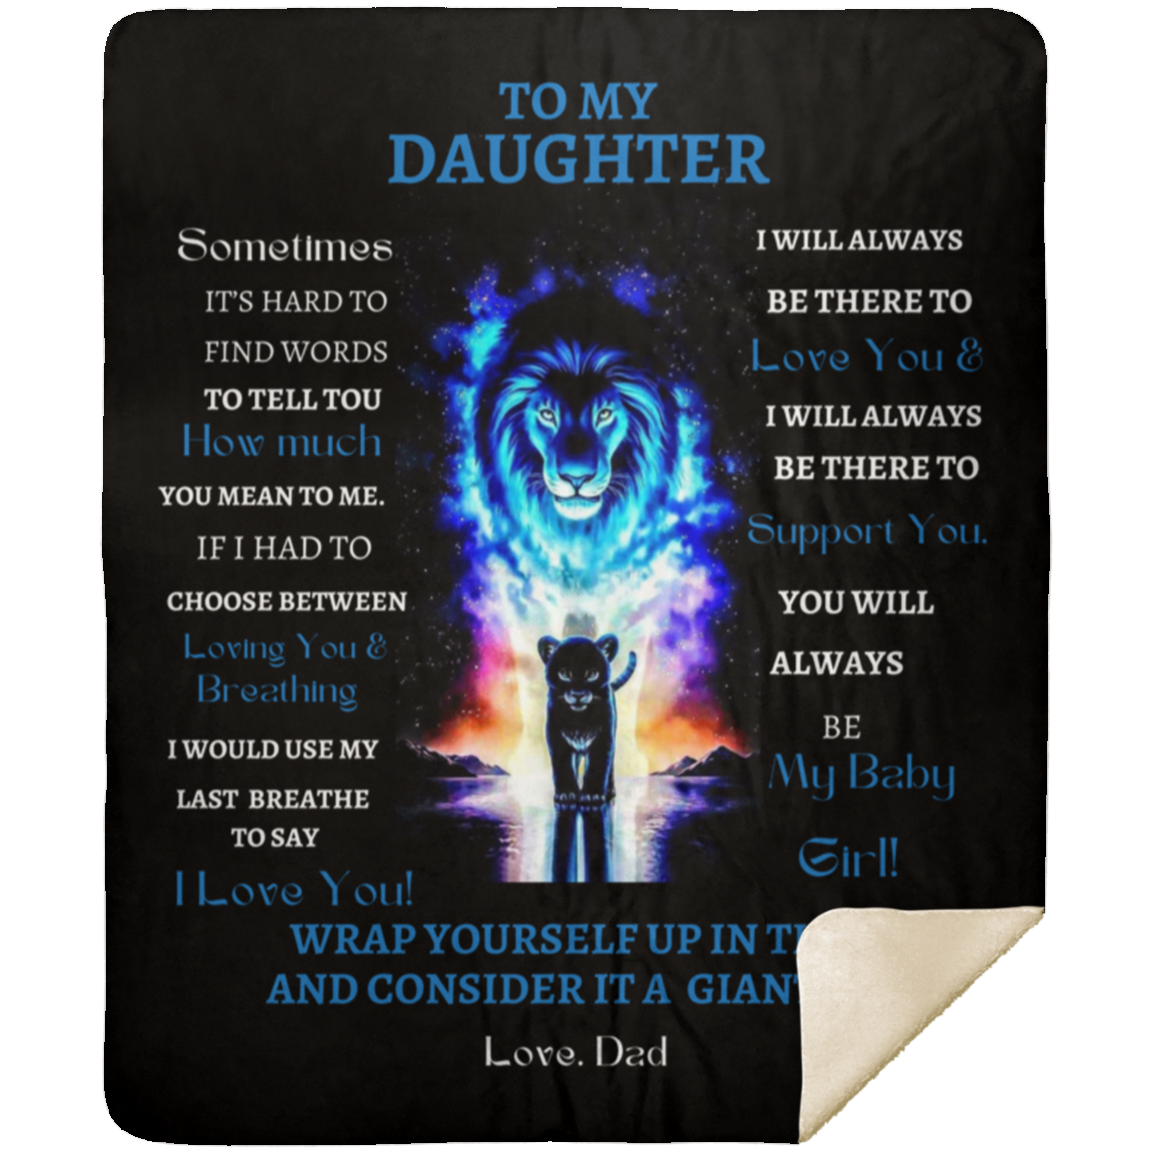 To My Daughter - Love Dad - MSHM Premium Sherpa Blanket 50x60